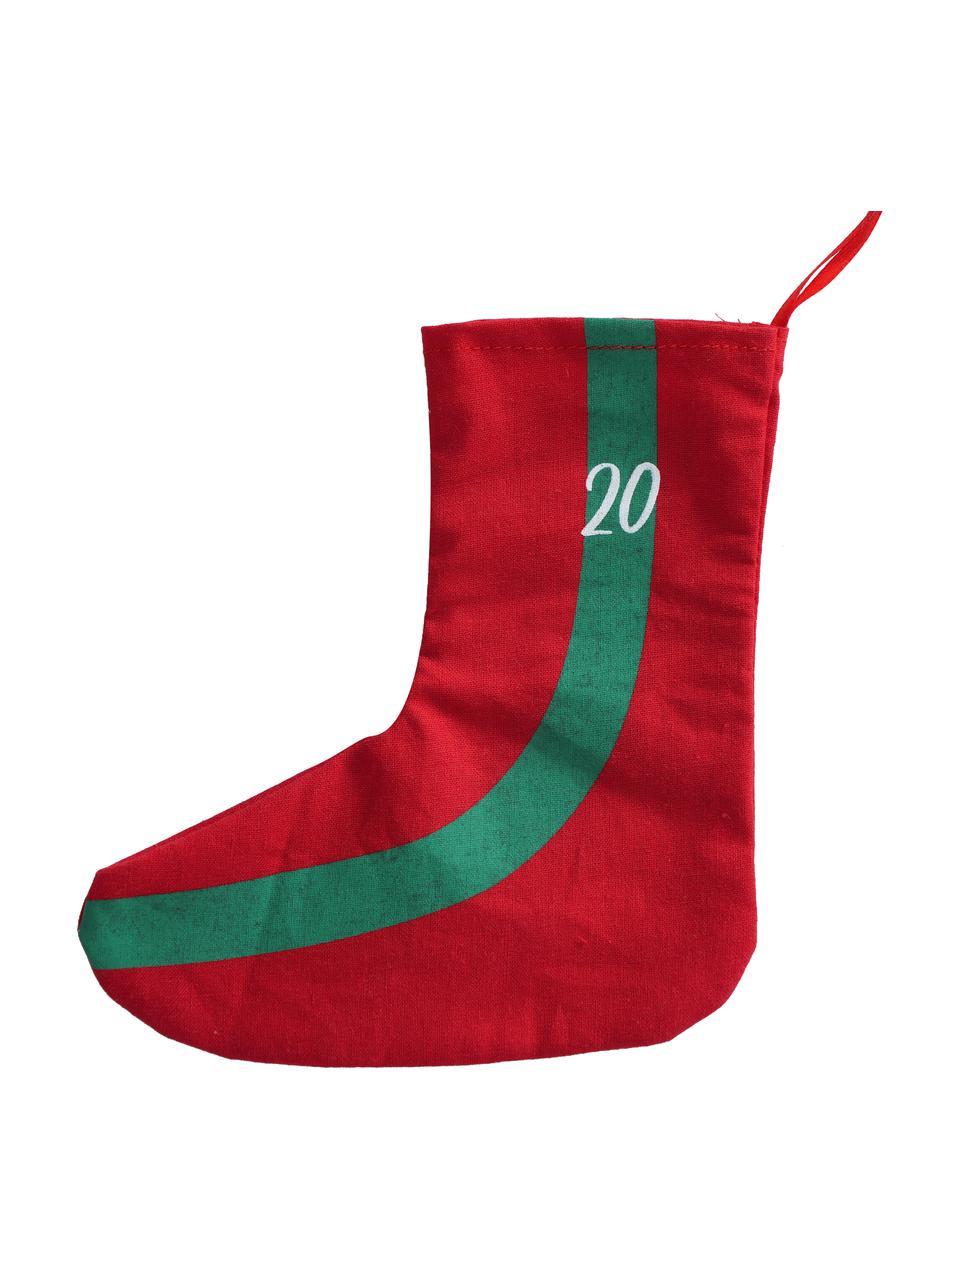 Calendario de Adviento Socky, 280 cm, Fieltro, Verde, rojo, blanco, L 280 cm